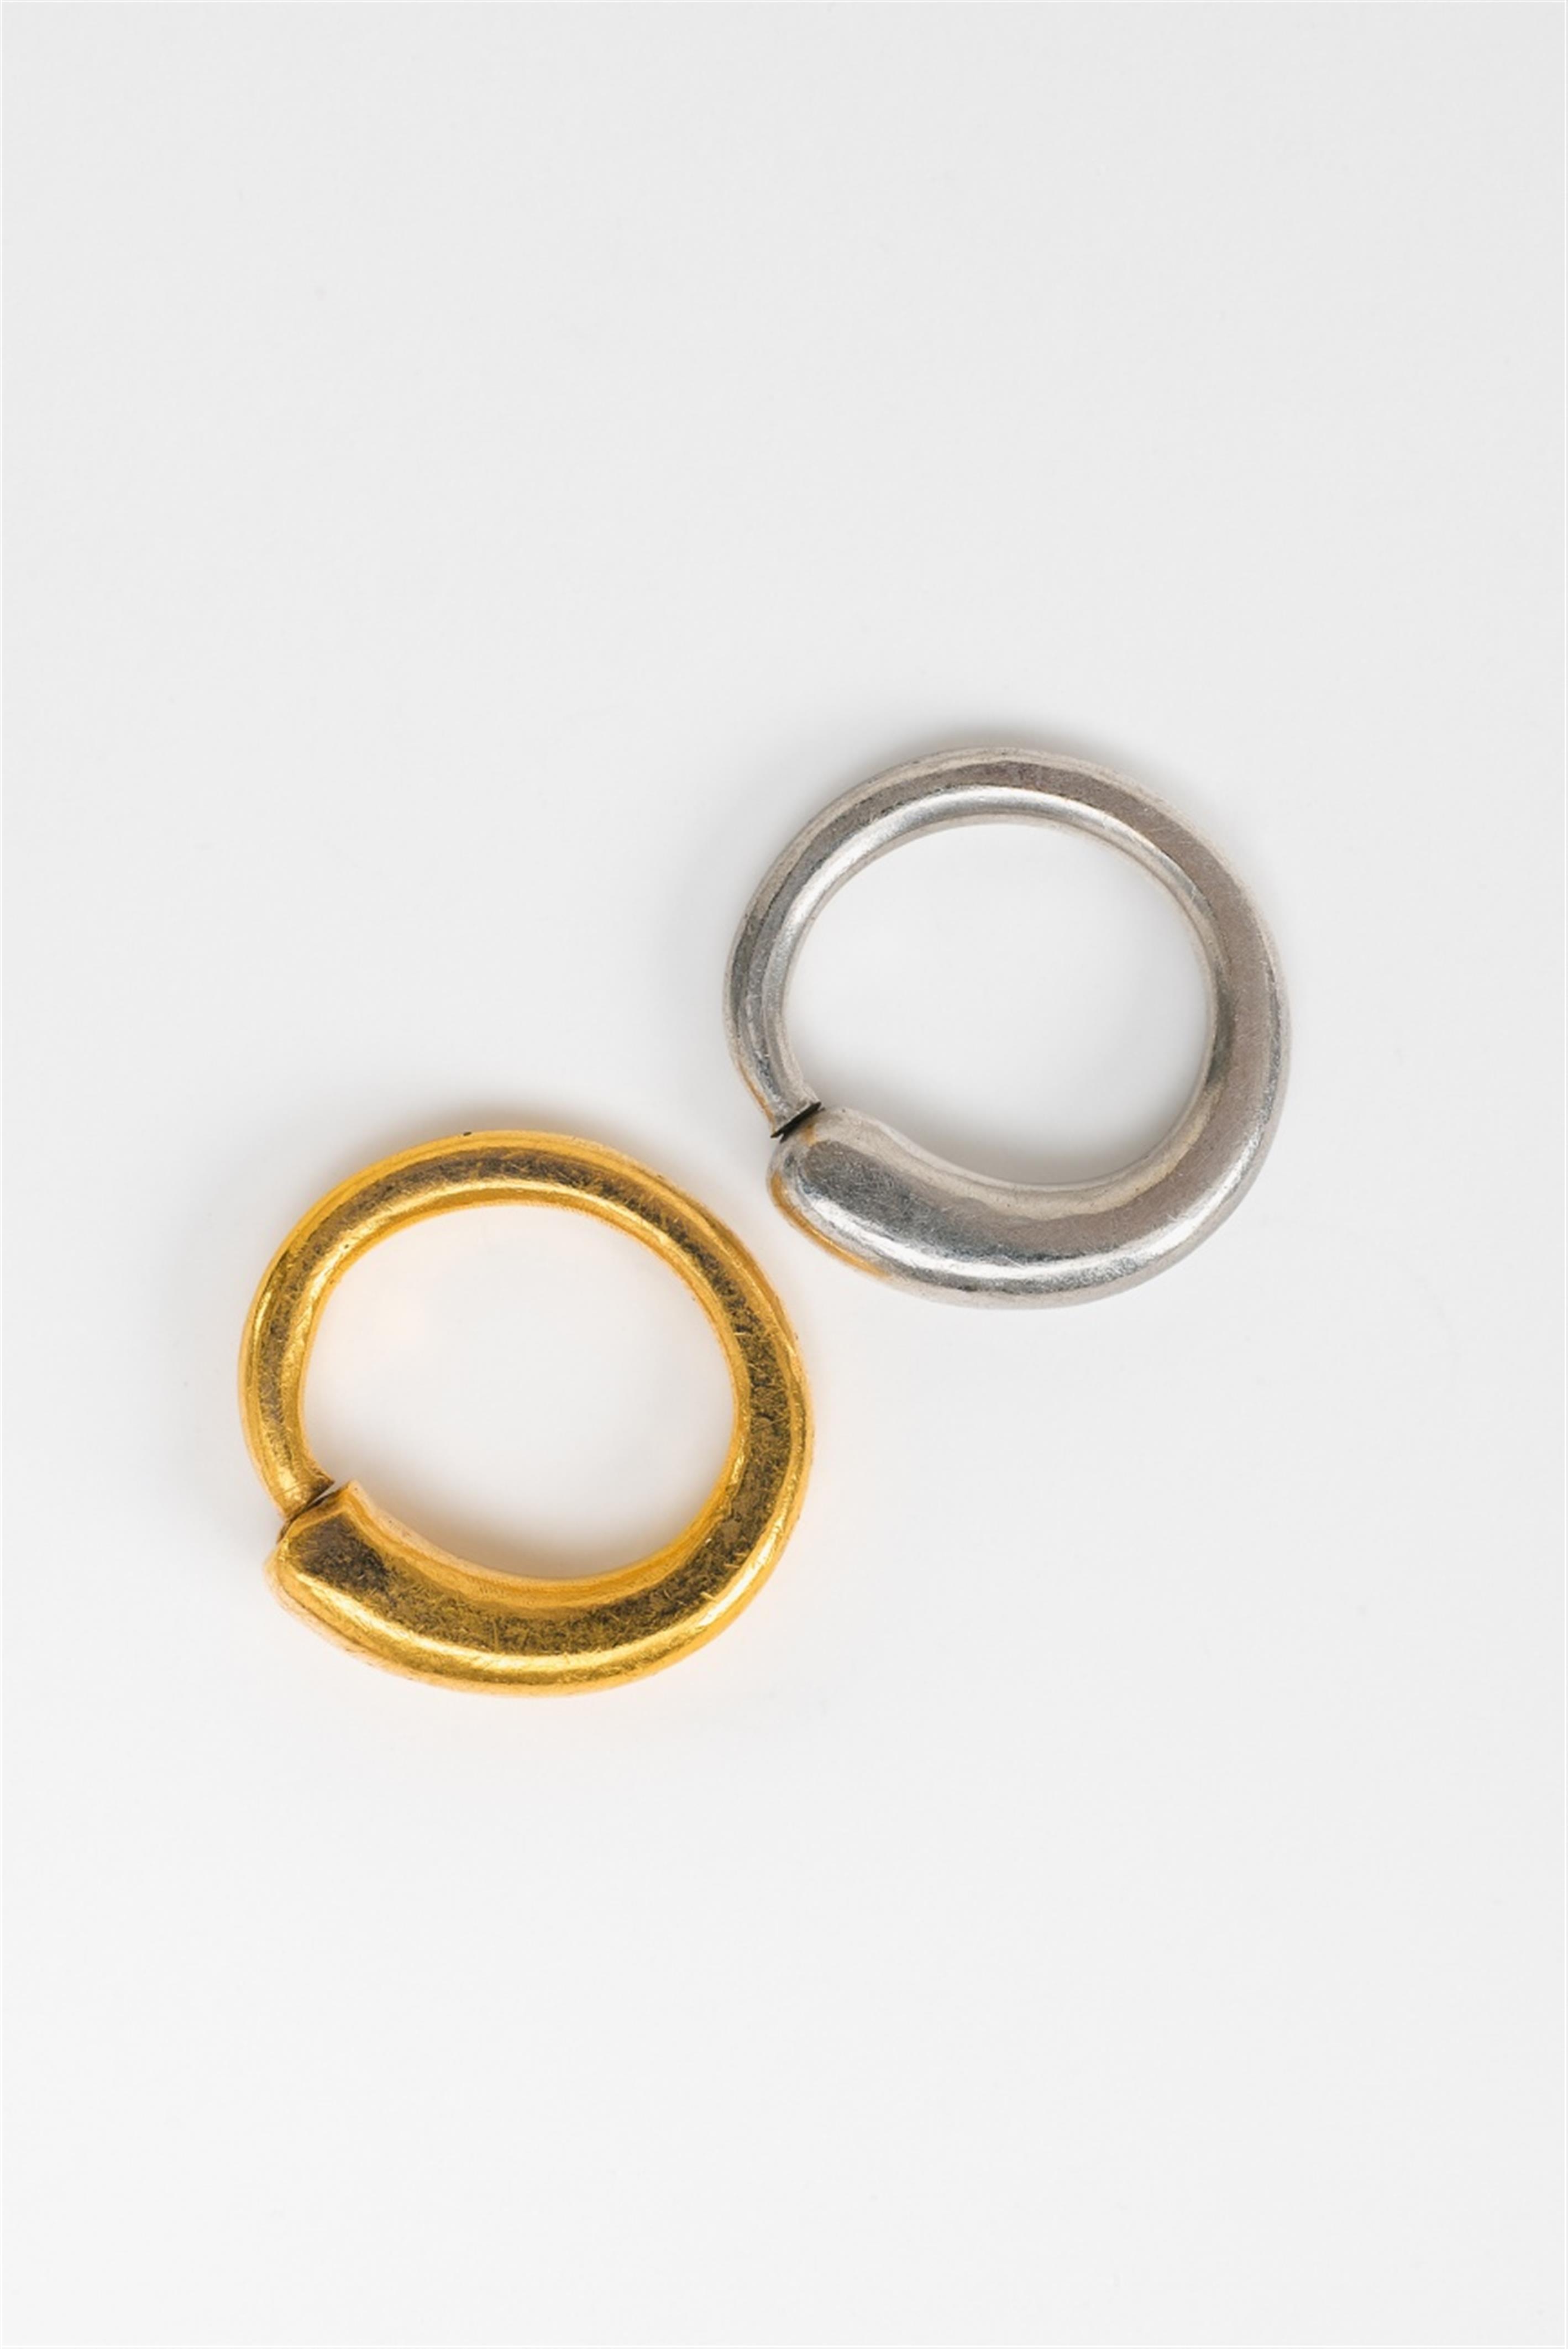 Two platinum/18 kt gold snake rings - image-2